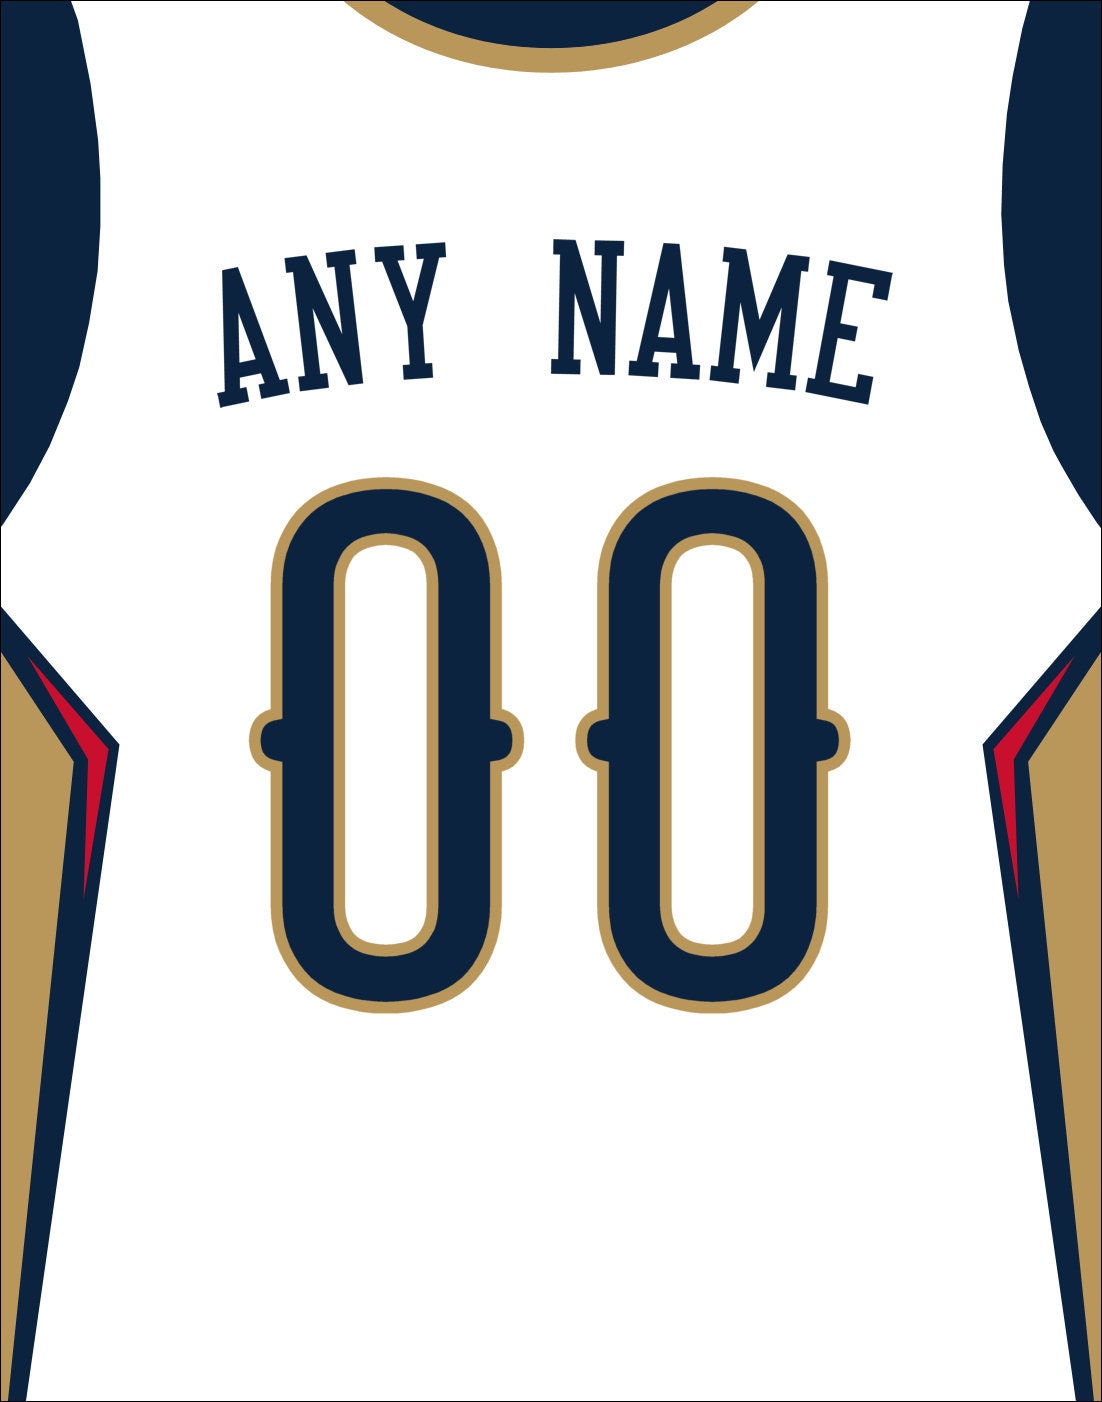 New Orleans Pelicans Merchandise